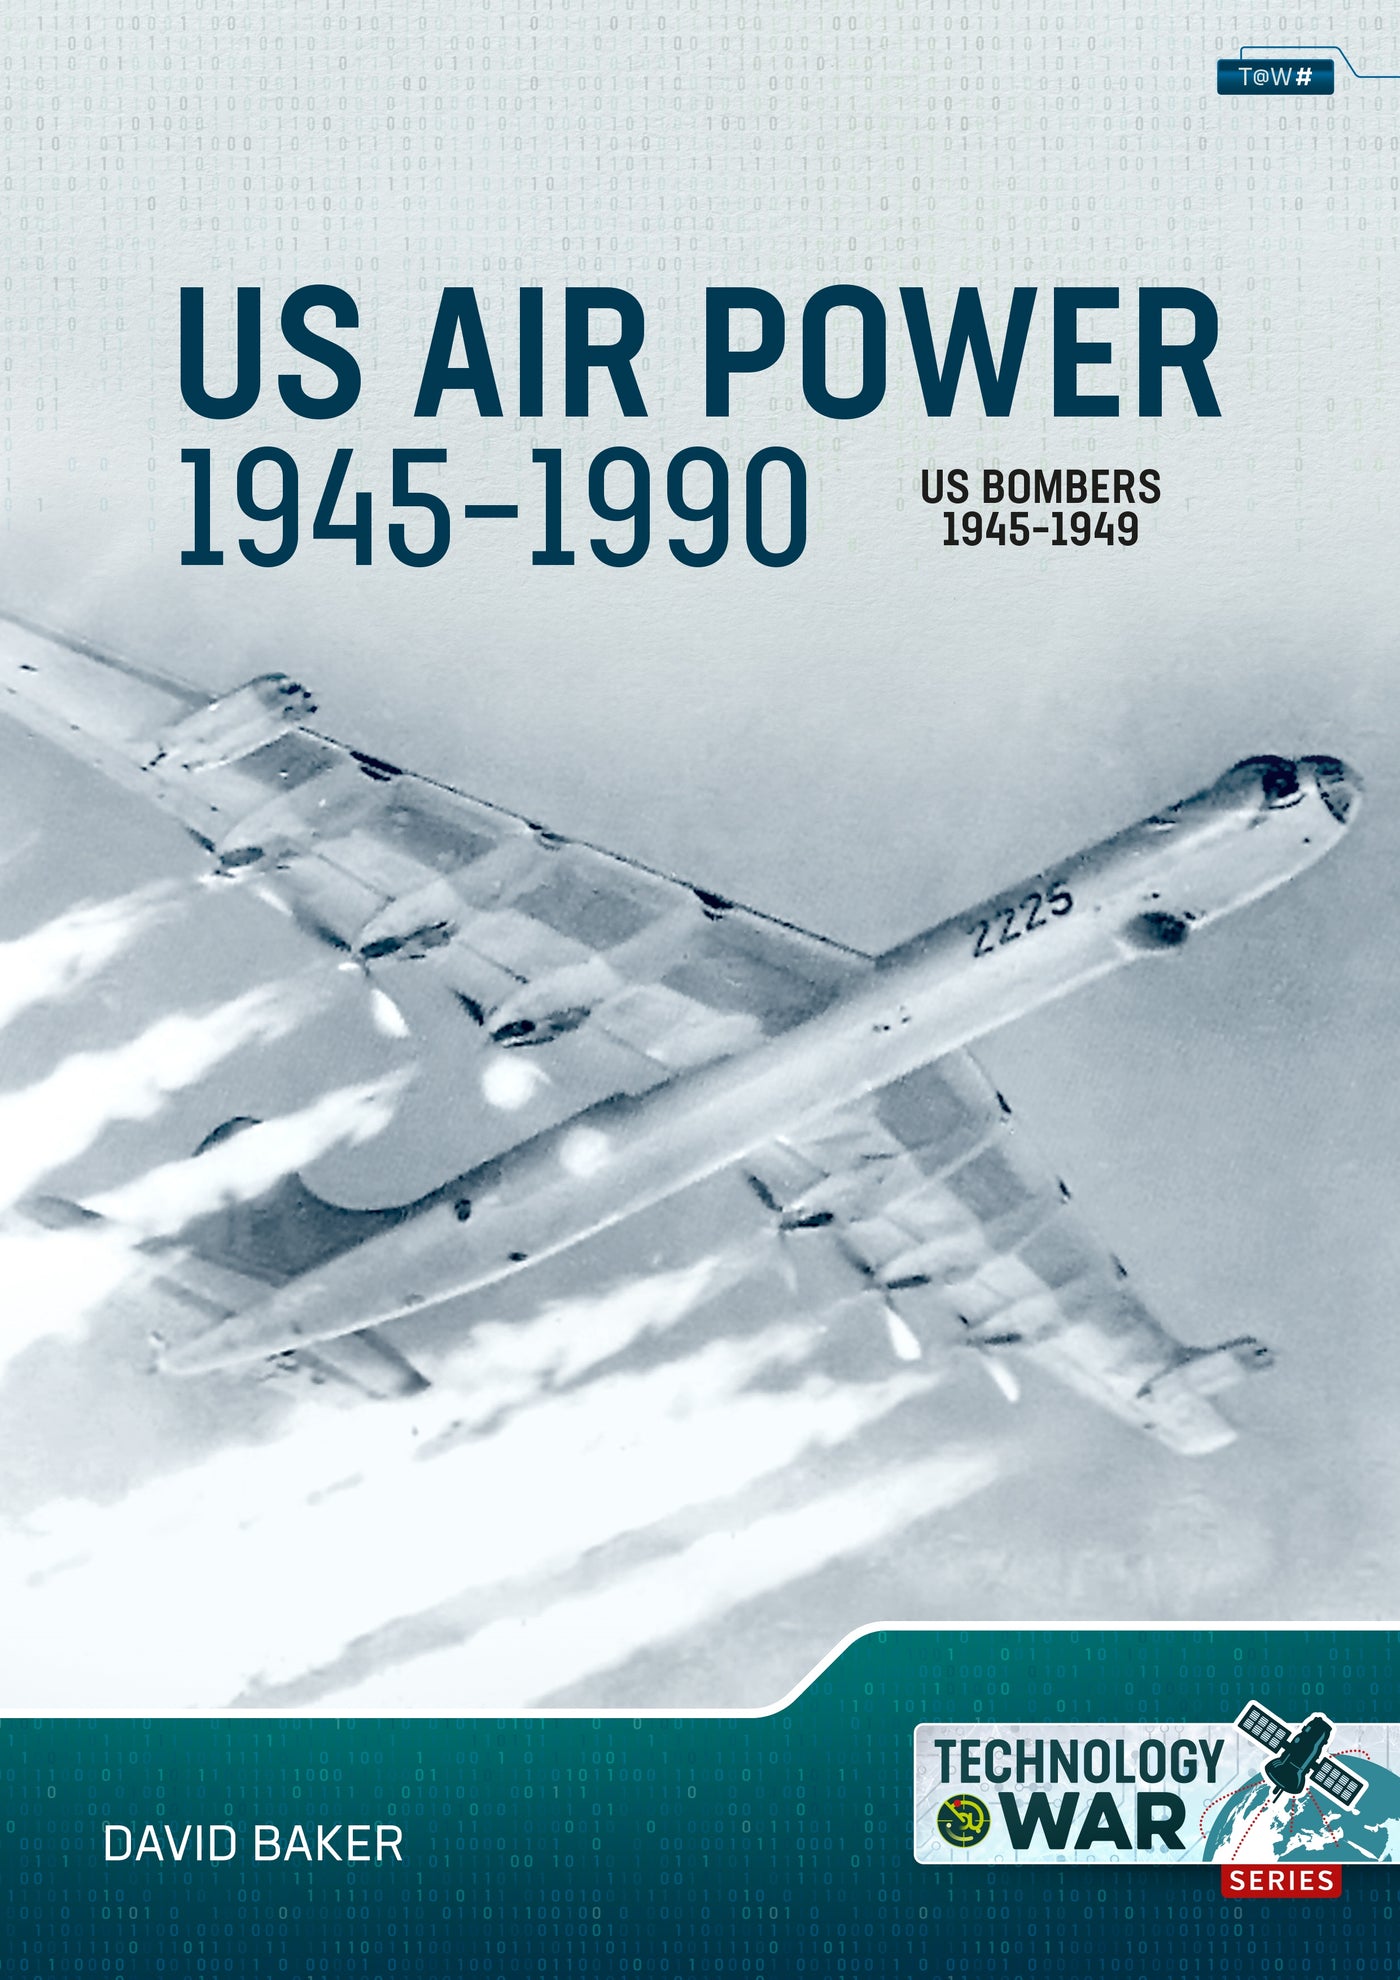 US Air Power, 1945-1990 Volume 2